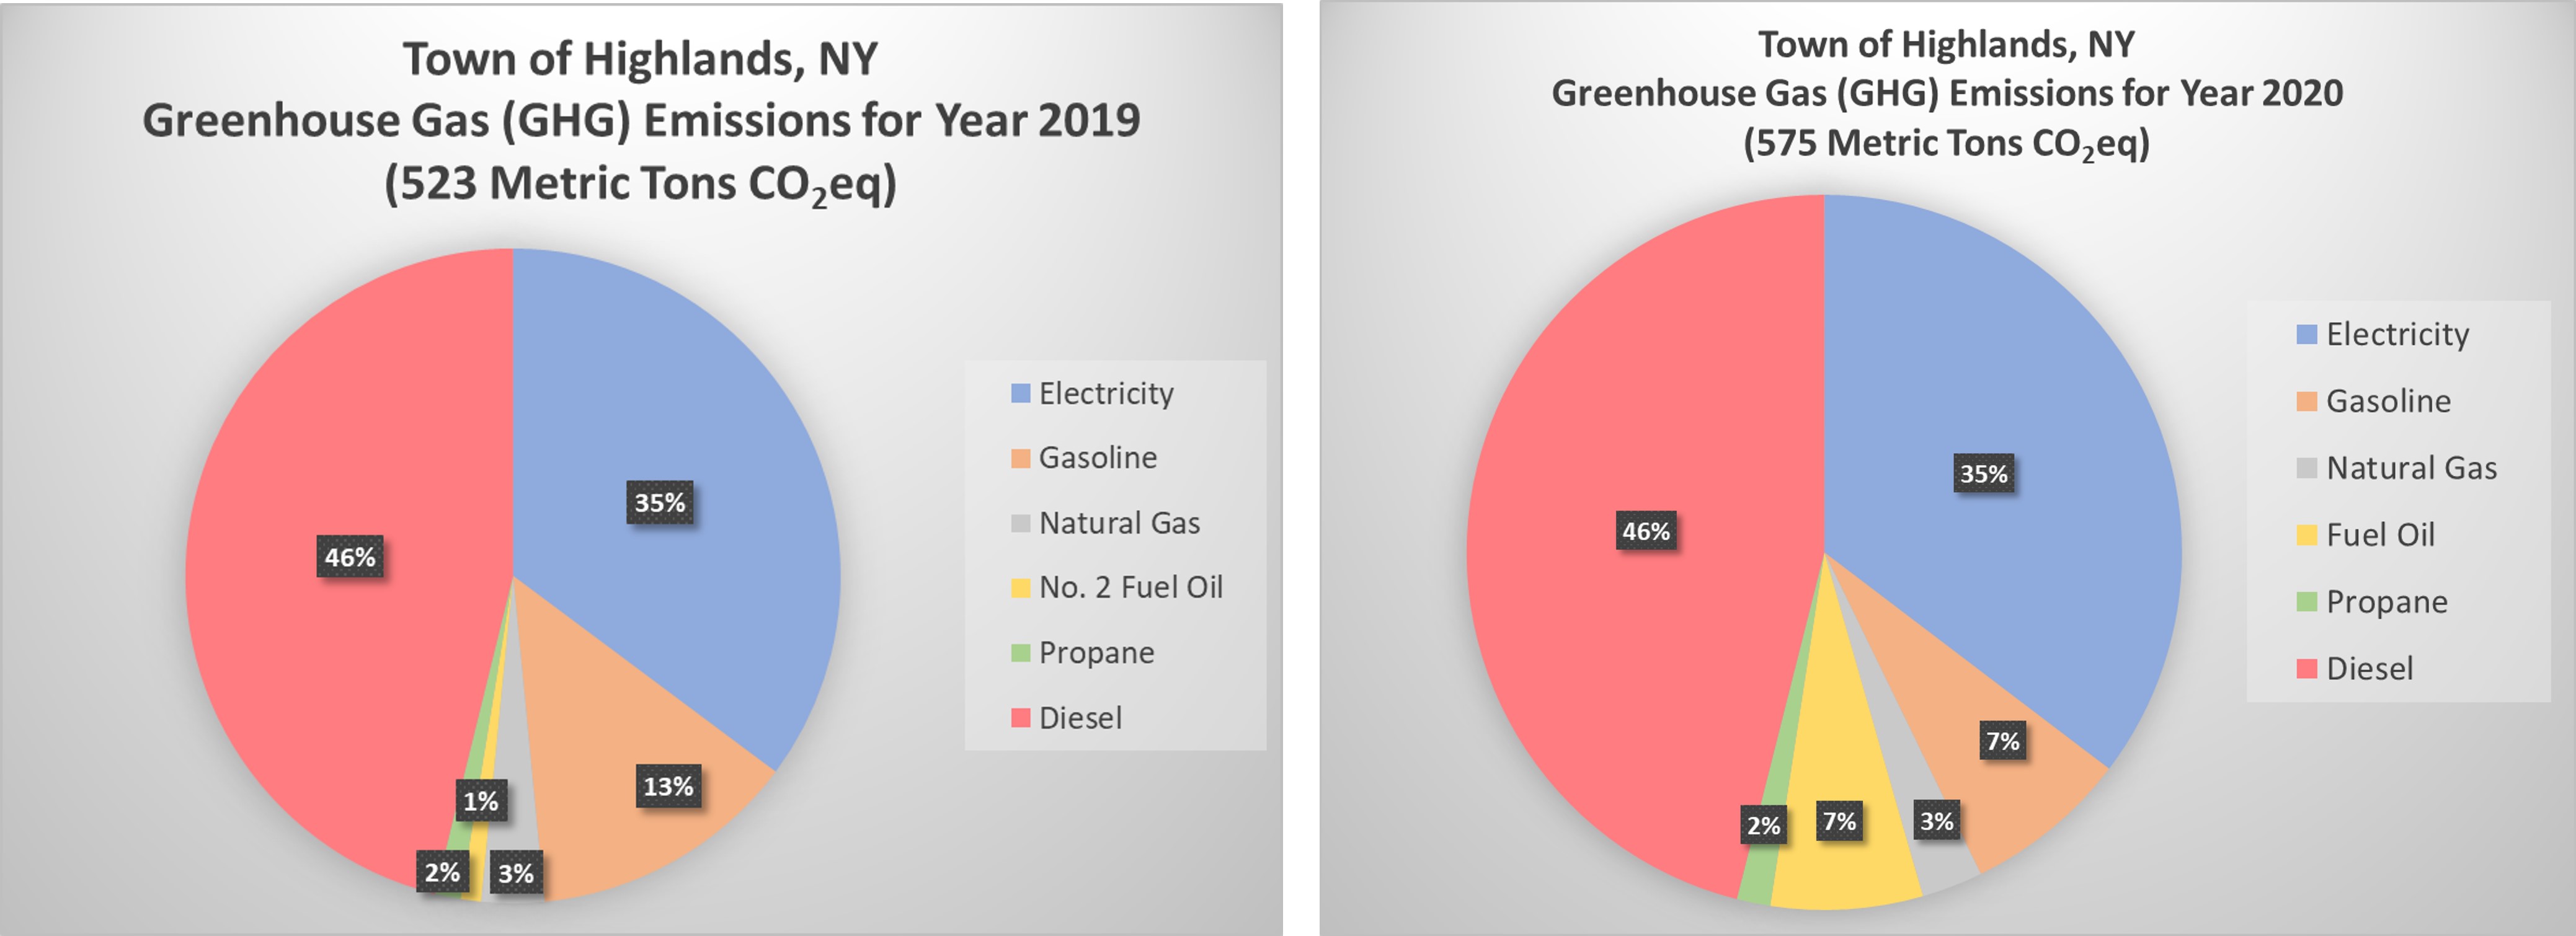 Greenhouse Gas Emissions Data